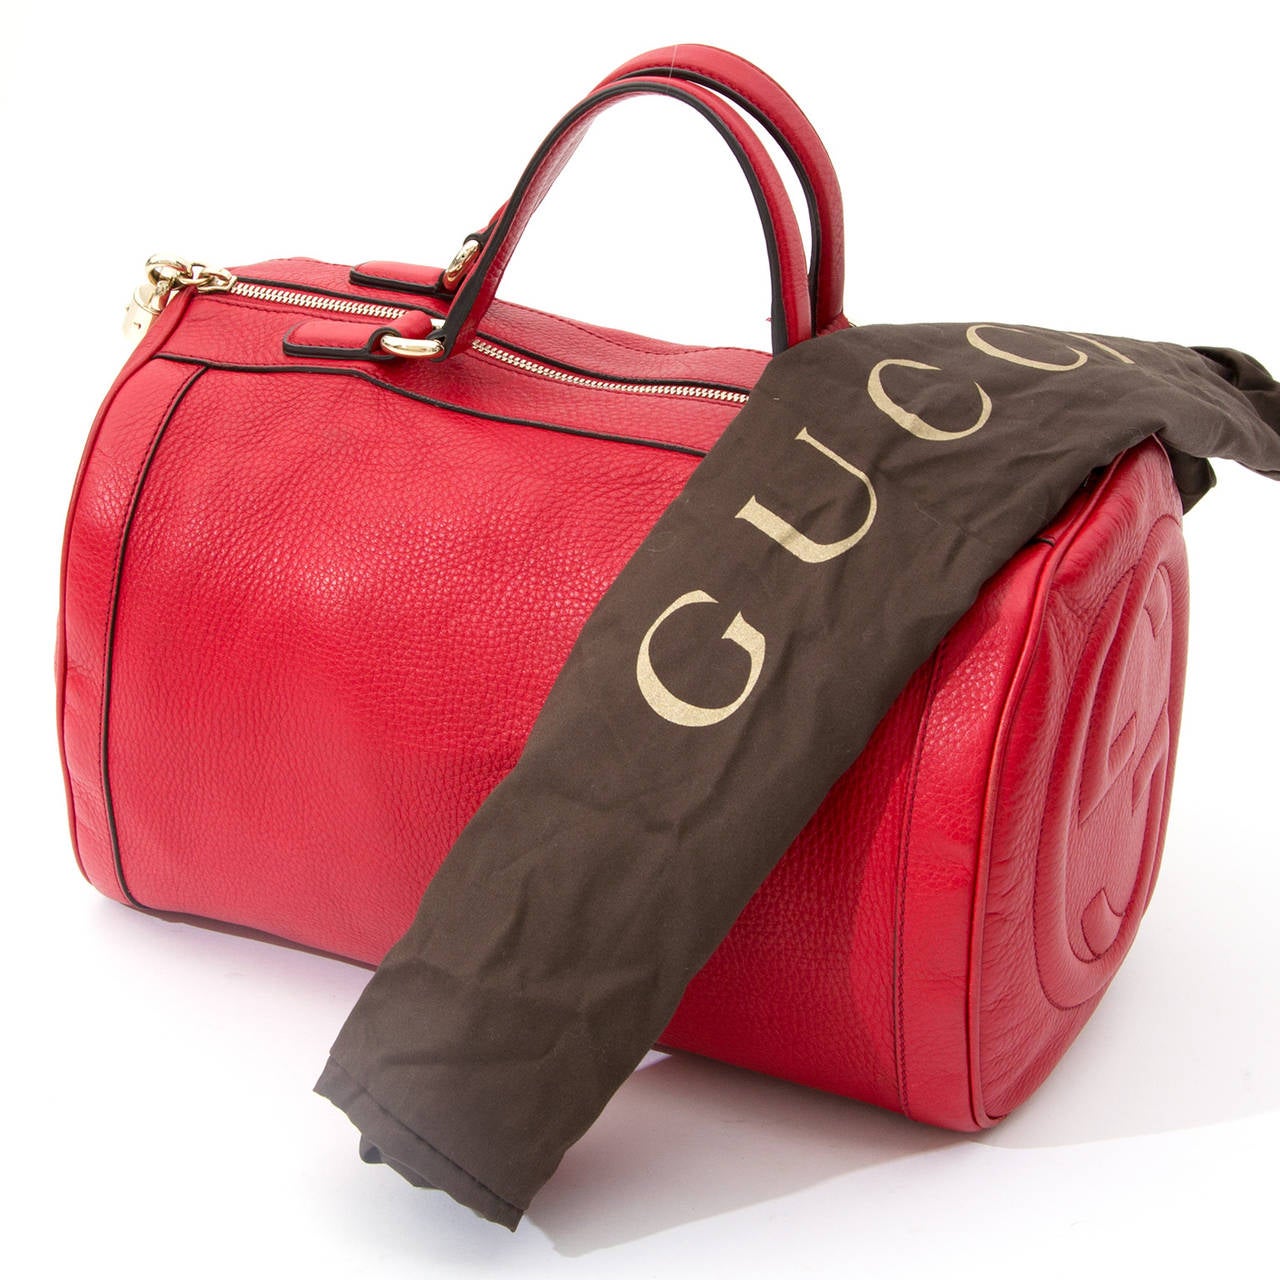 Gucci Red Boston Shoulder Bag at 1stdibs